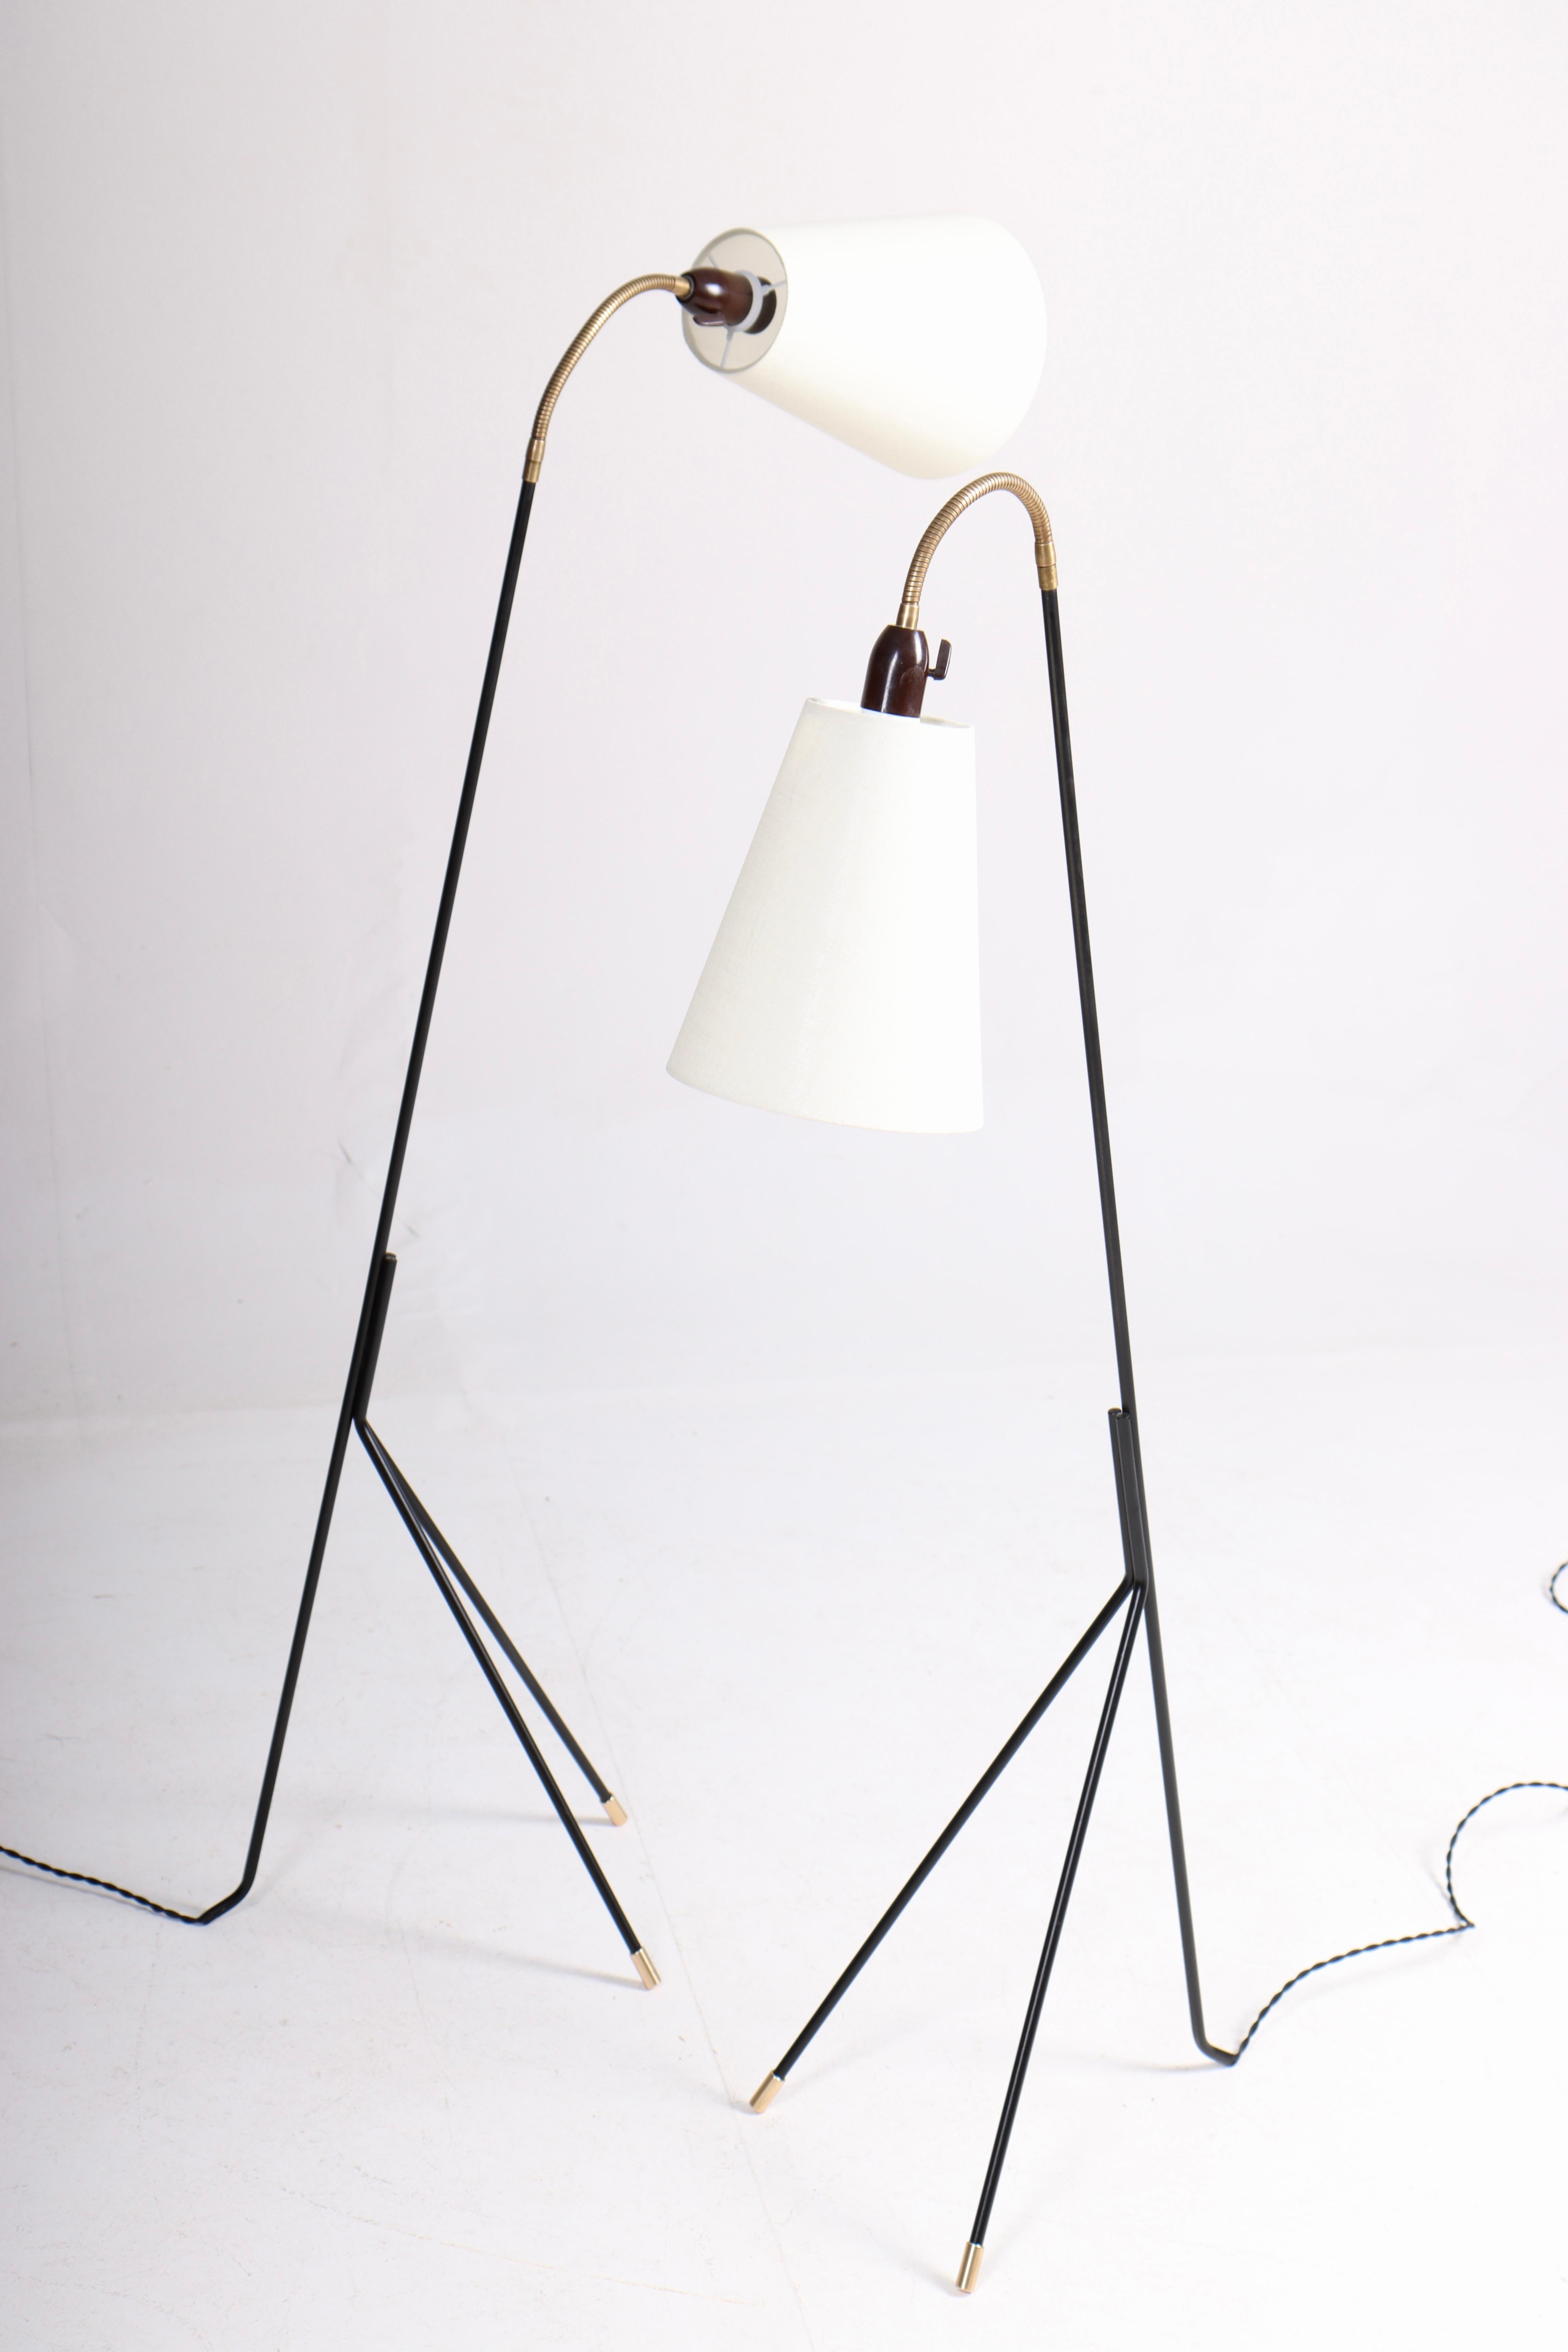 Pair of Midcentury Floor Lamps by Holm Sørensen, Made in Denmark, 1950s